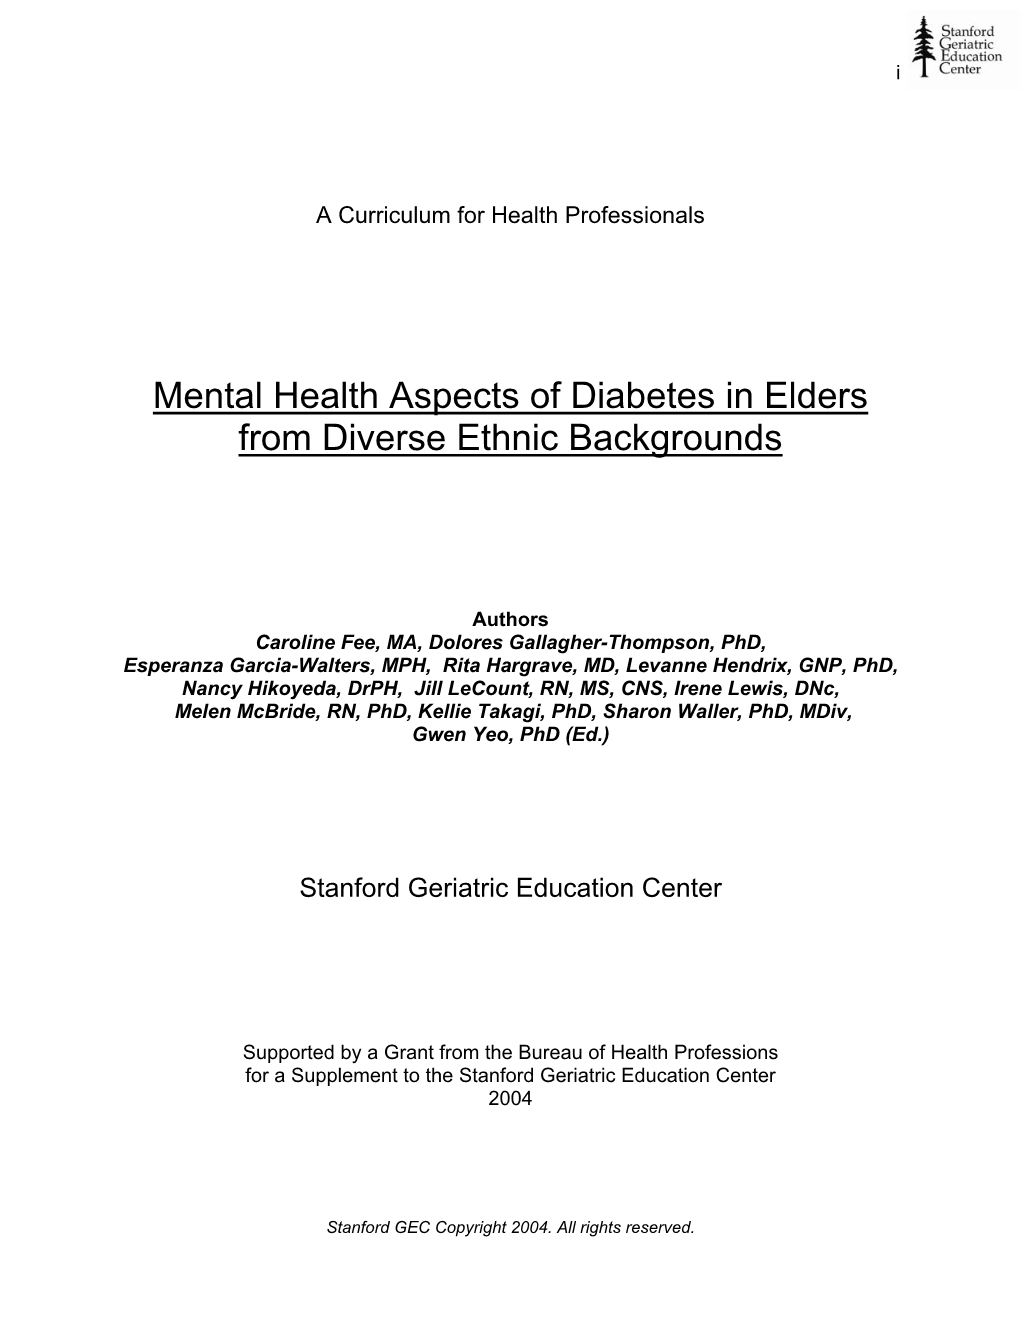 Mental Health in Diabetes Curriculum